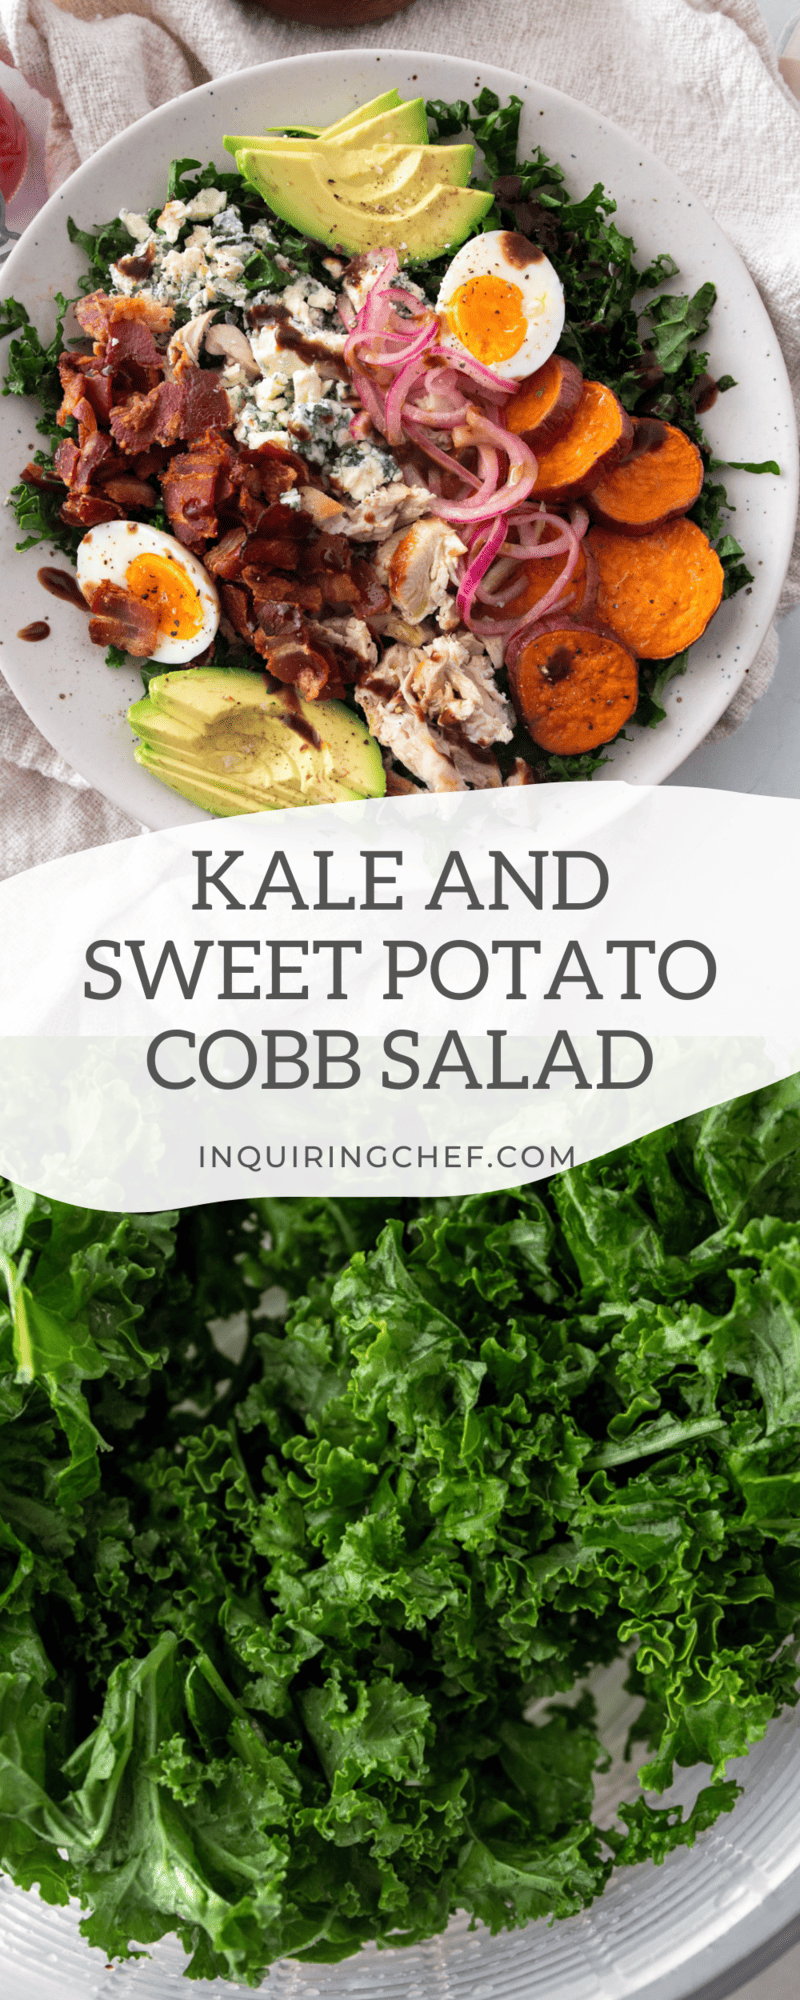 kale and sweet potato cobb salad